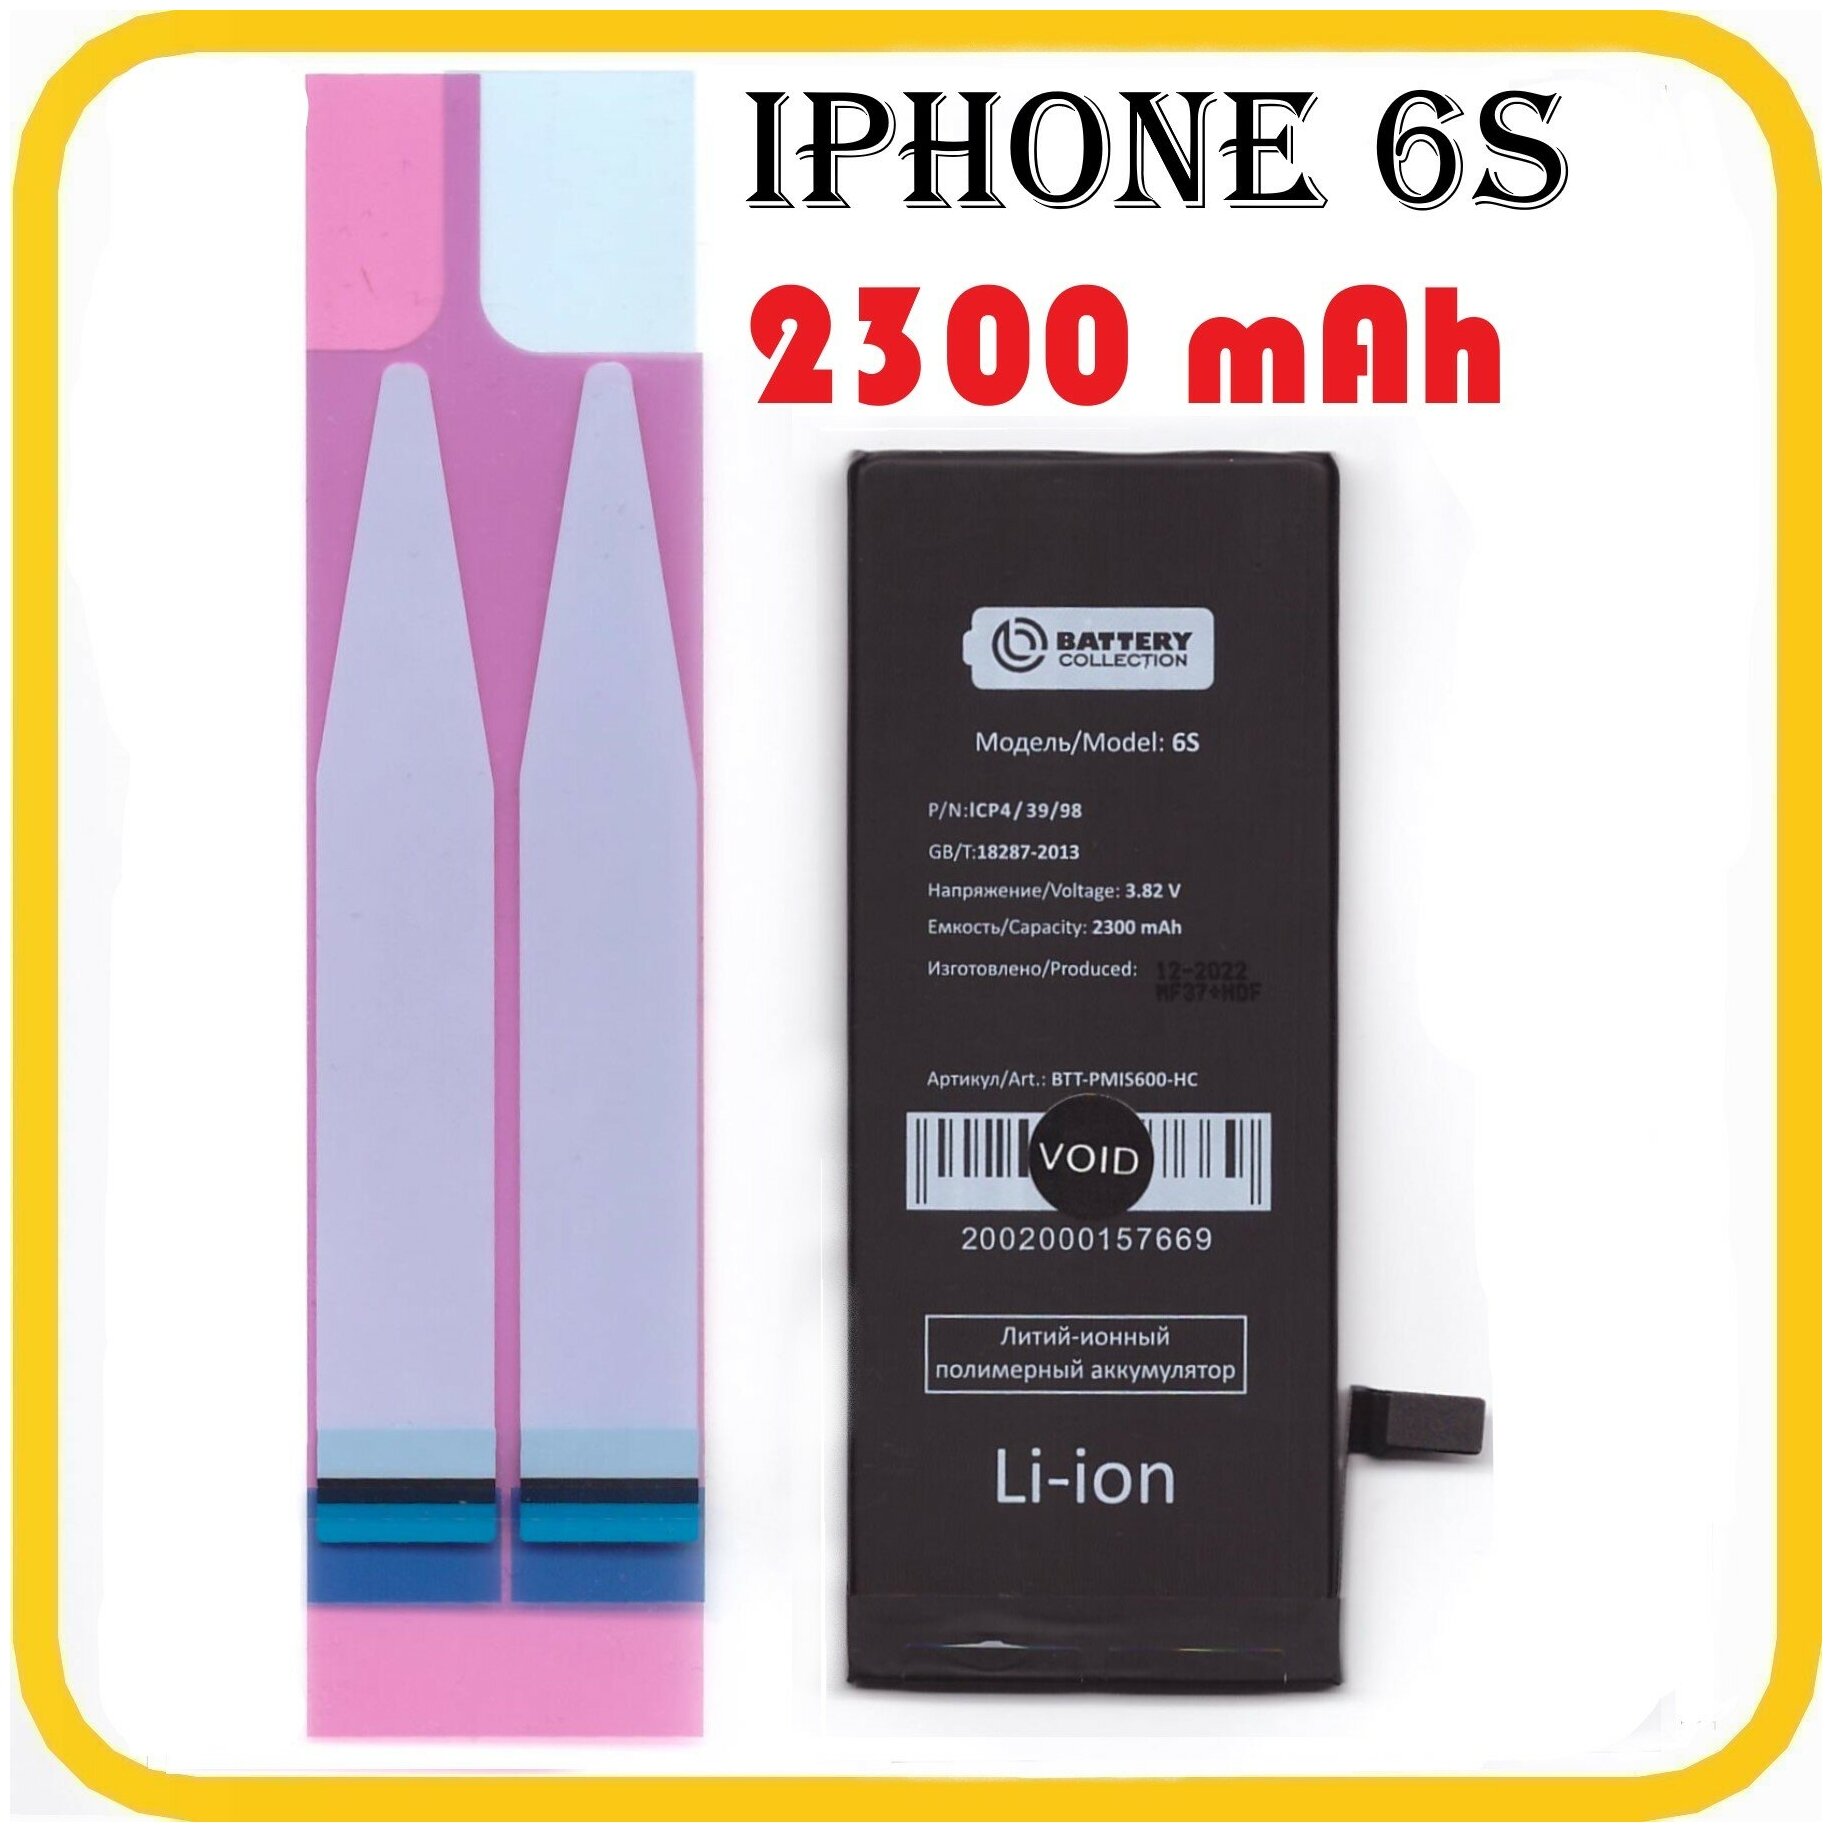 Аккумулятор для Apple iPhone 6S - усиленная 2300 mAh - Battery Collection (Премиум)